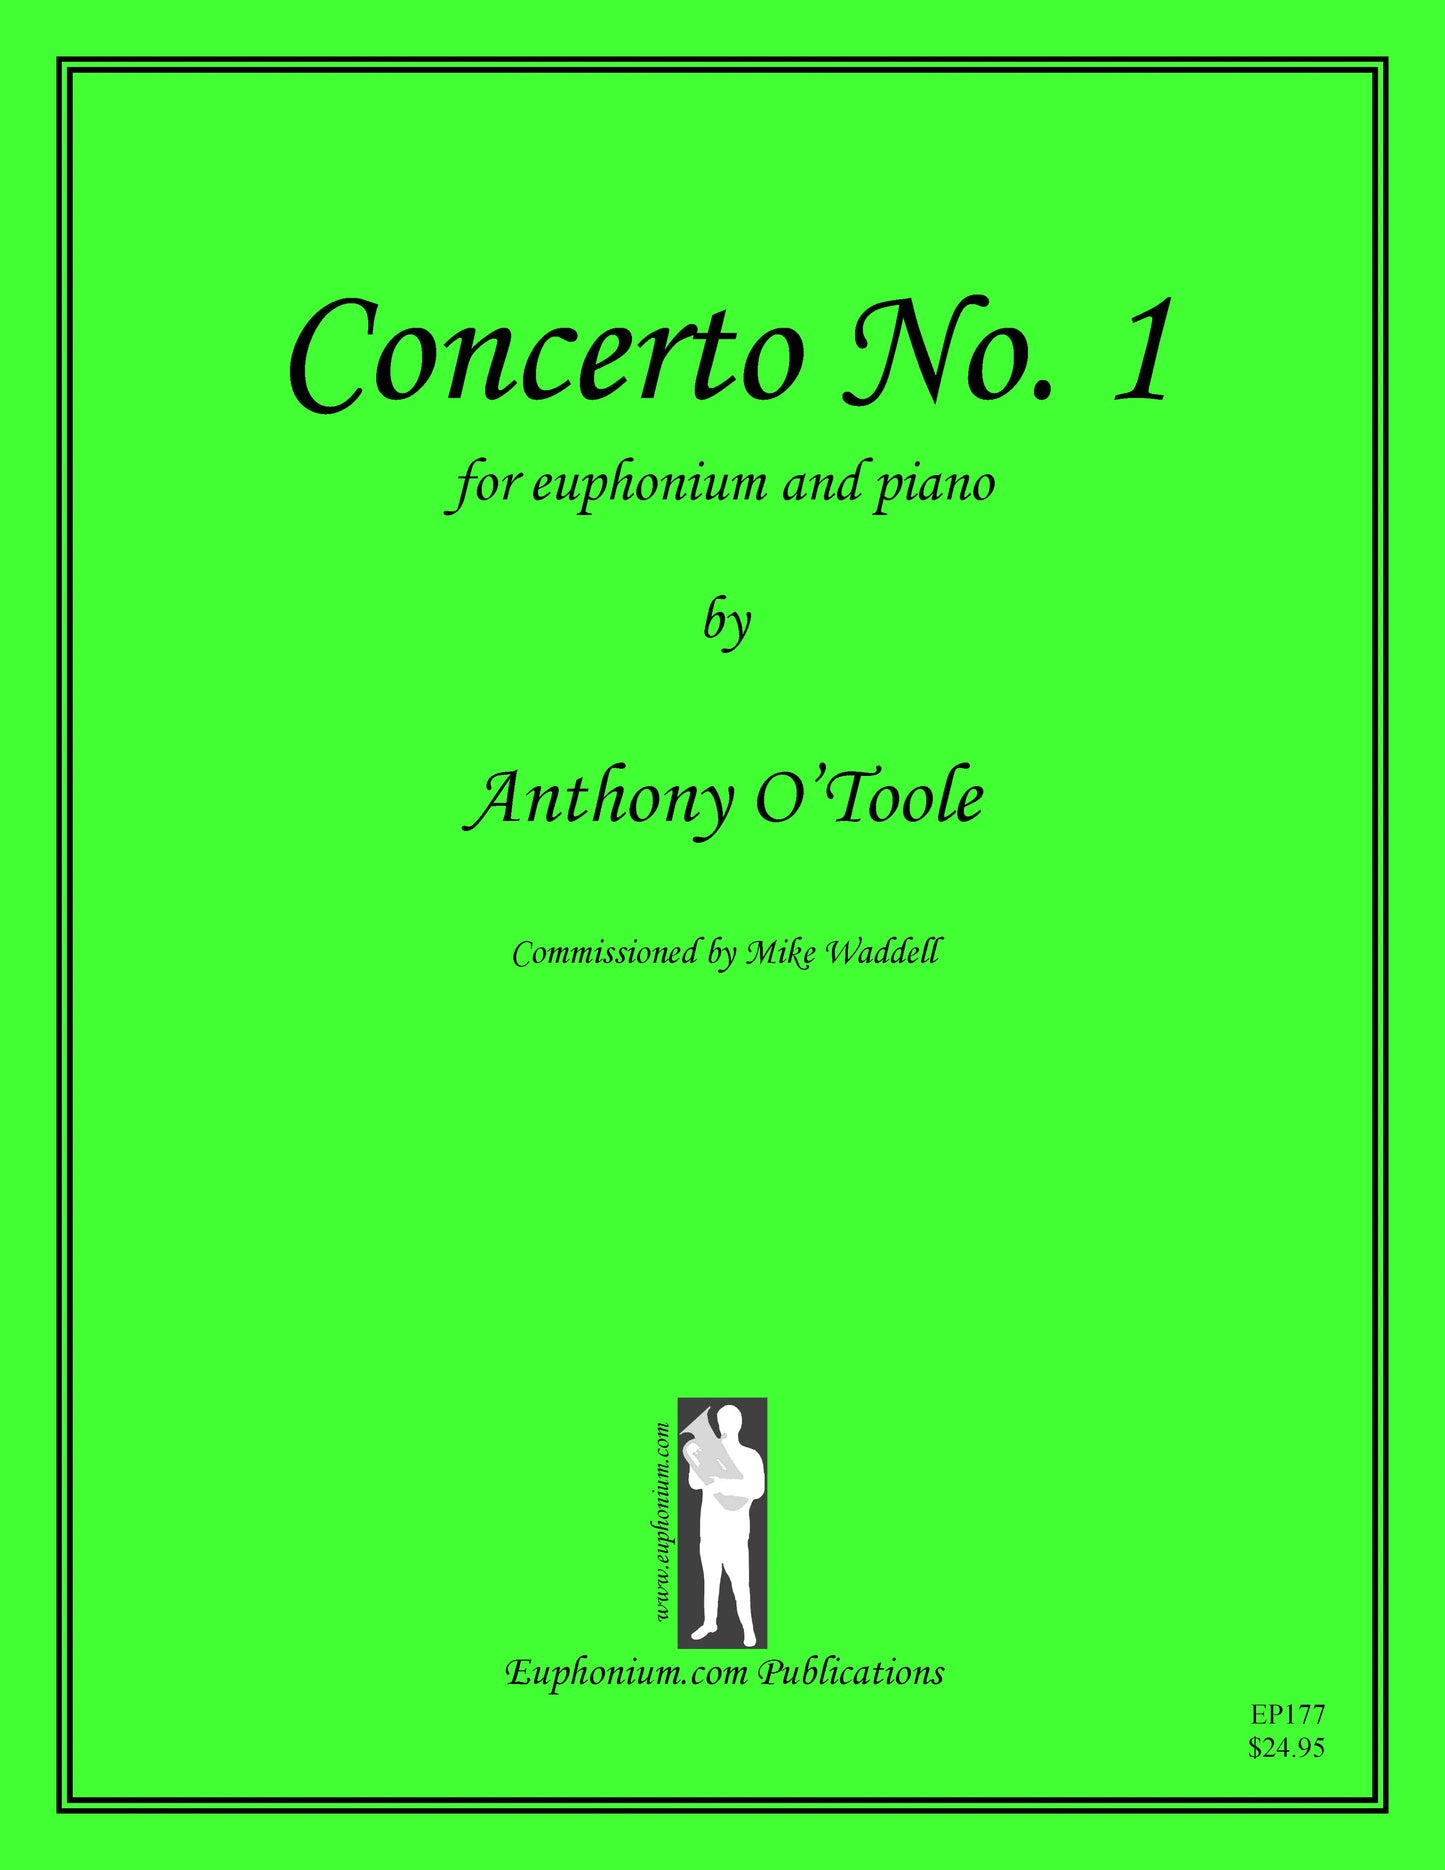 O'Toole, Anthony - Euphonium Concerto No. 1 - DOWNLOAD